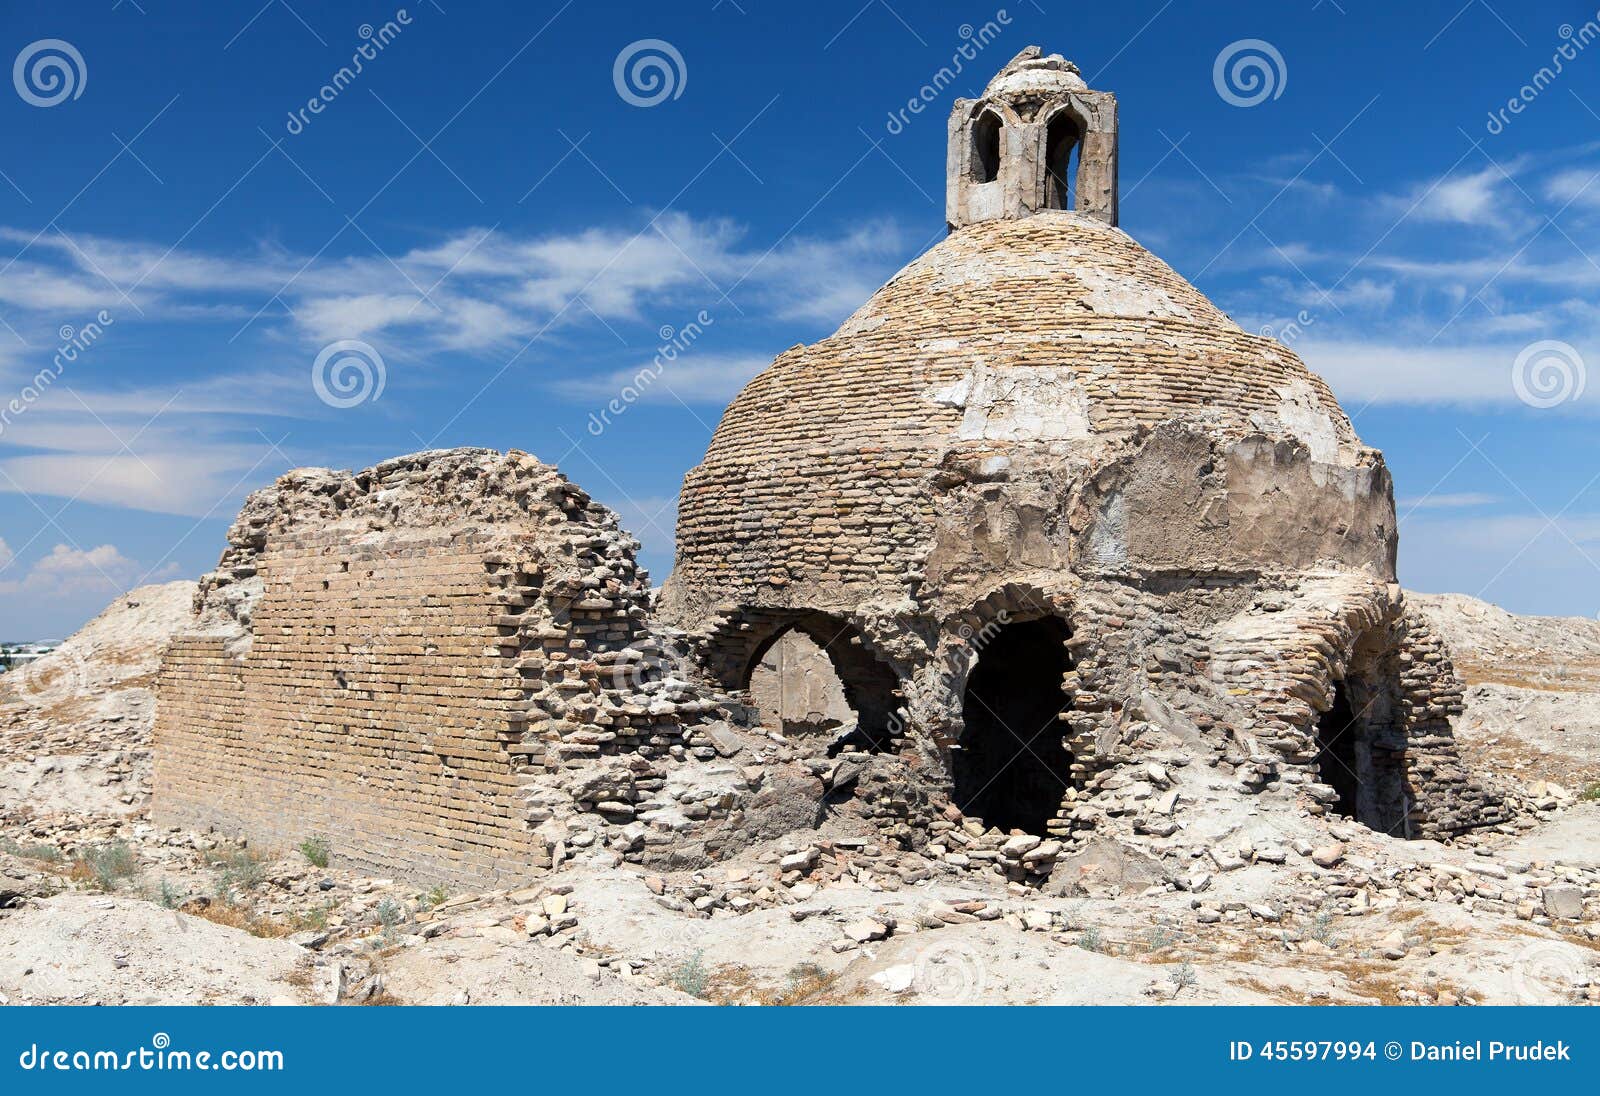 ruins on ark - bukhara